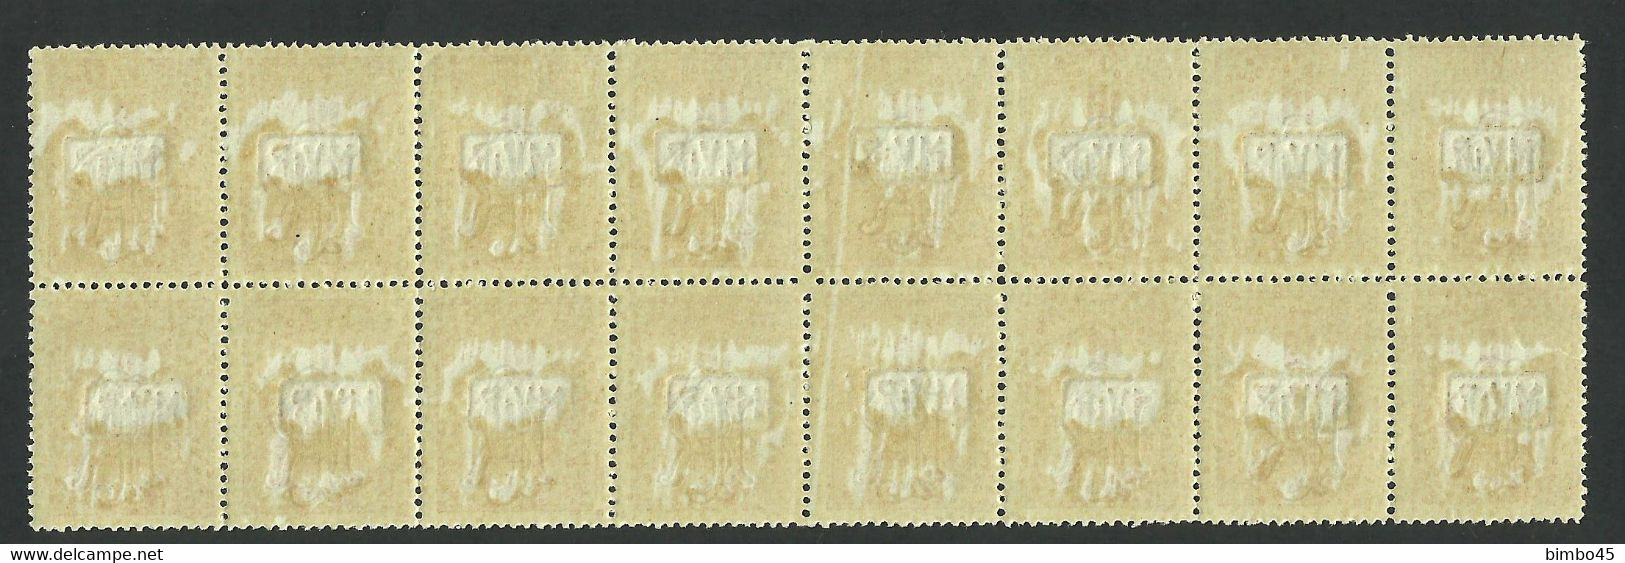 Error / Variety  -- Romania 1918  MNH -- Revenue Stamp / German Occupation  / M.V.i.R. - Fiscales